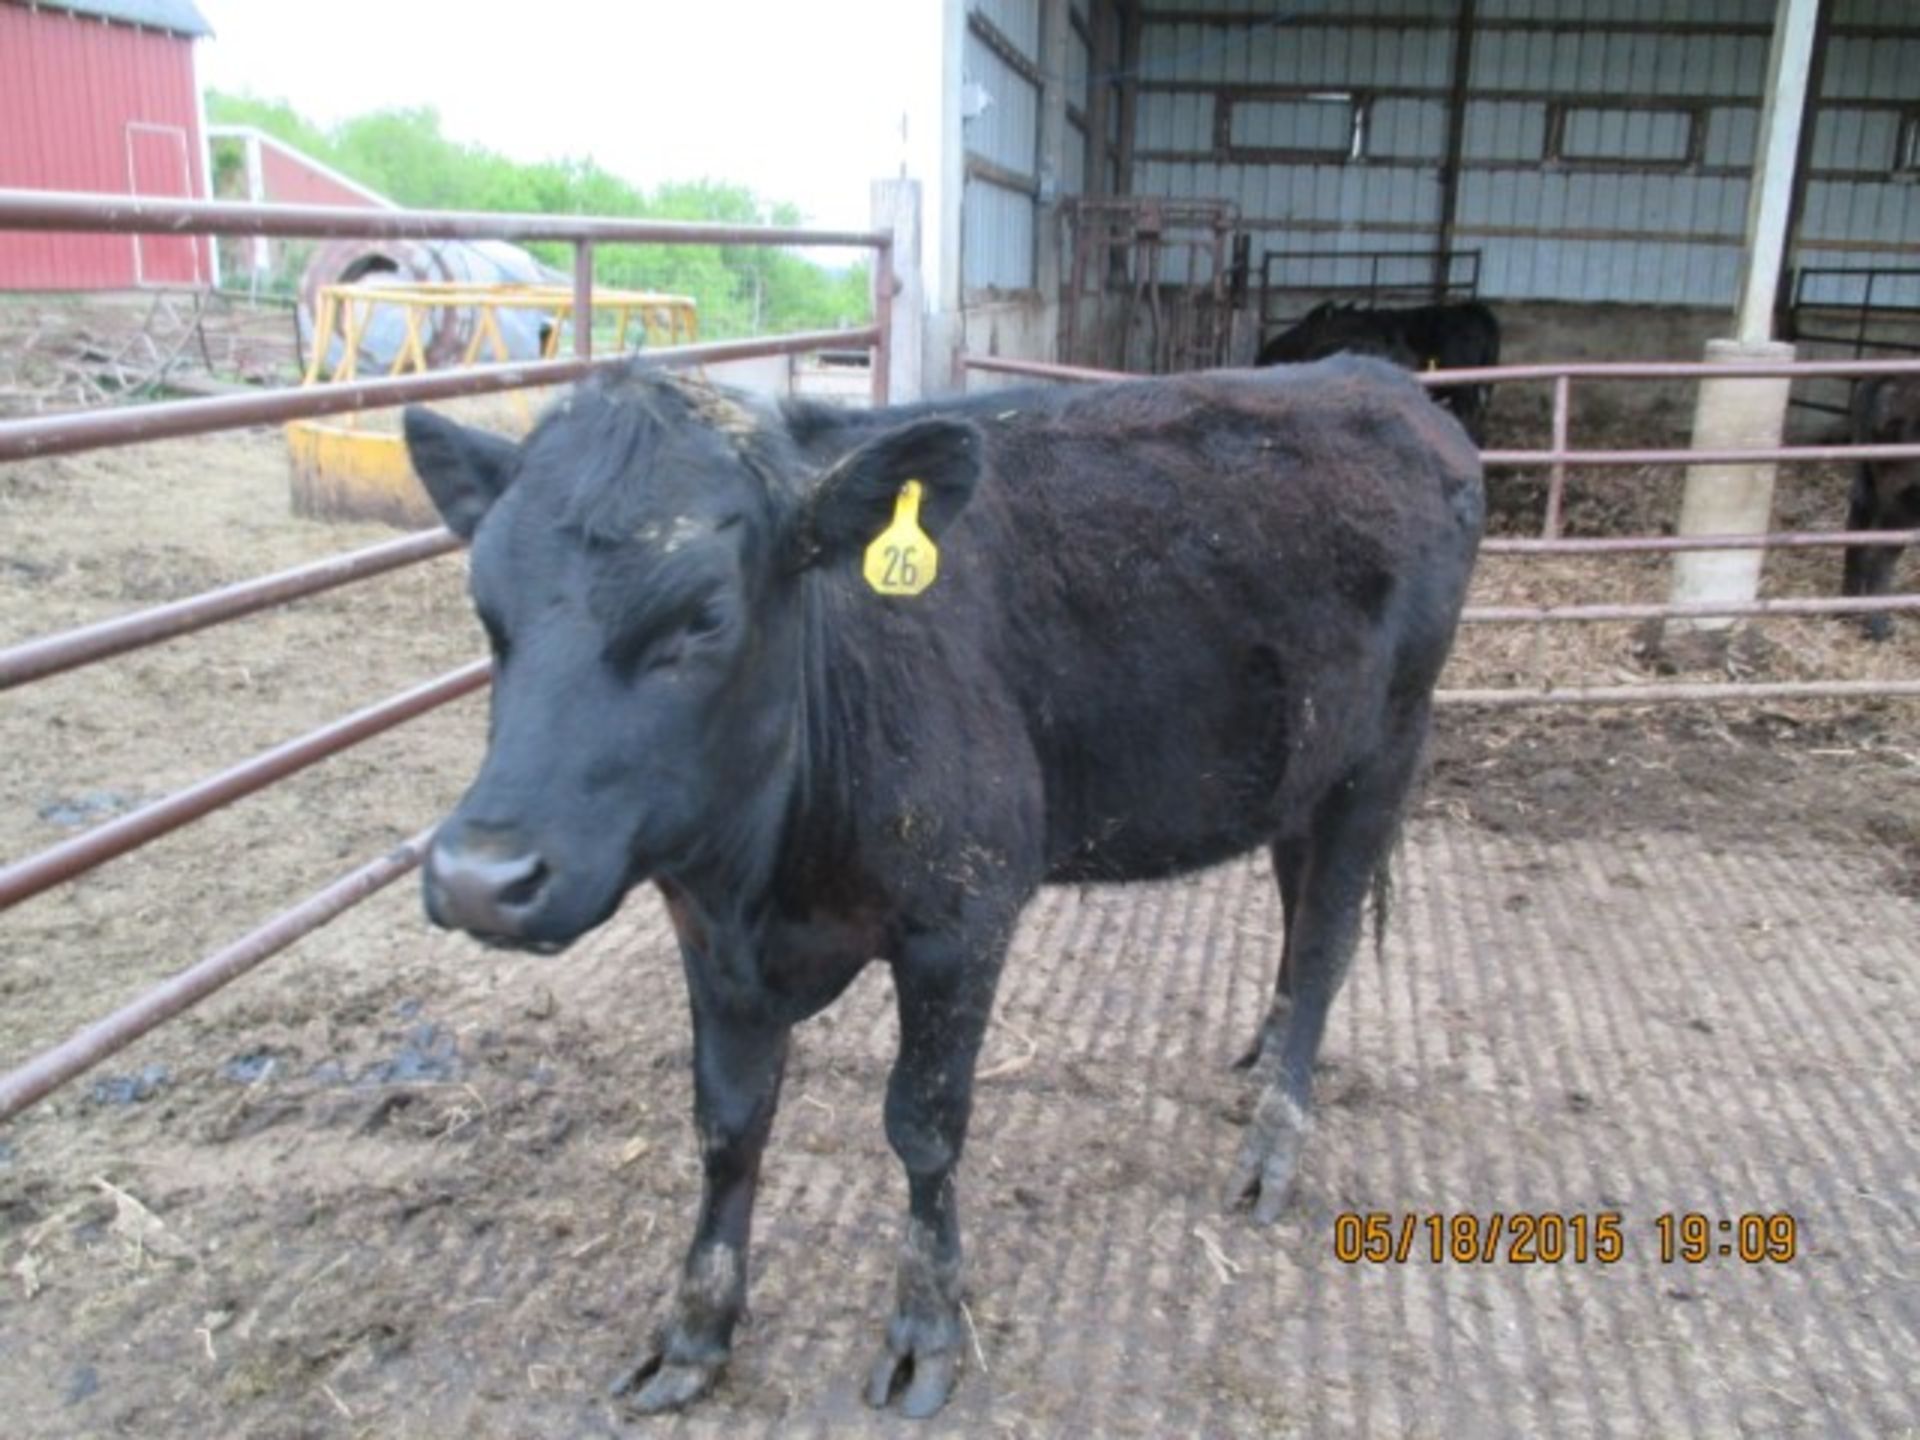 Heifer #26, approx 600-700 lbs